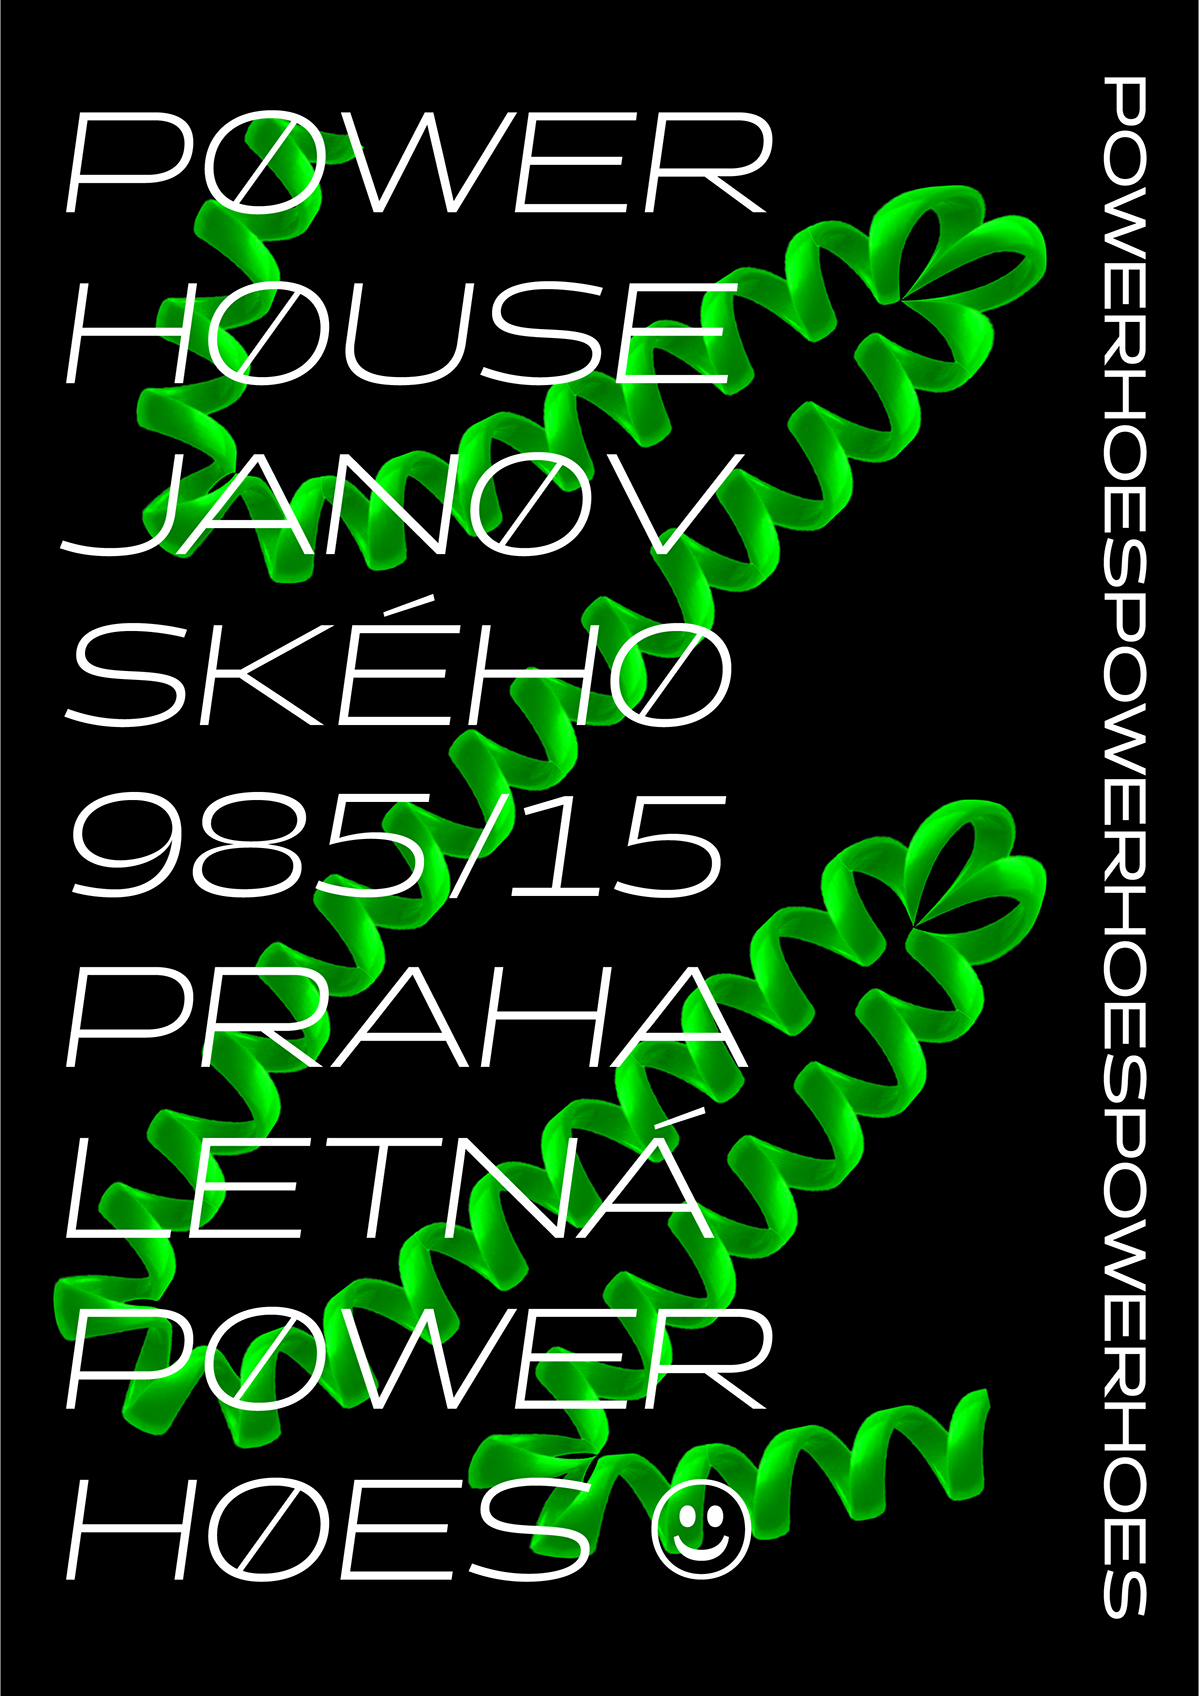 Powerhouse prague Emoticon 3D green spray photo string design art